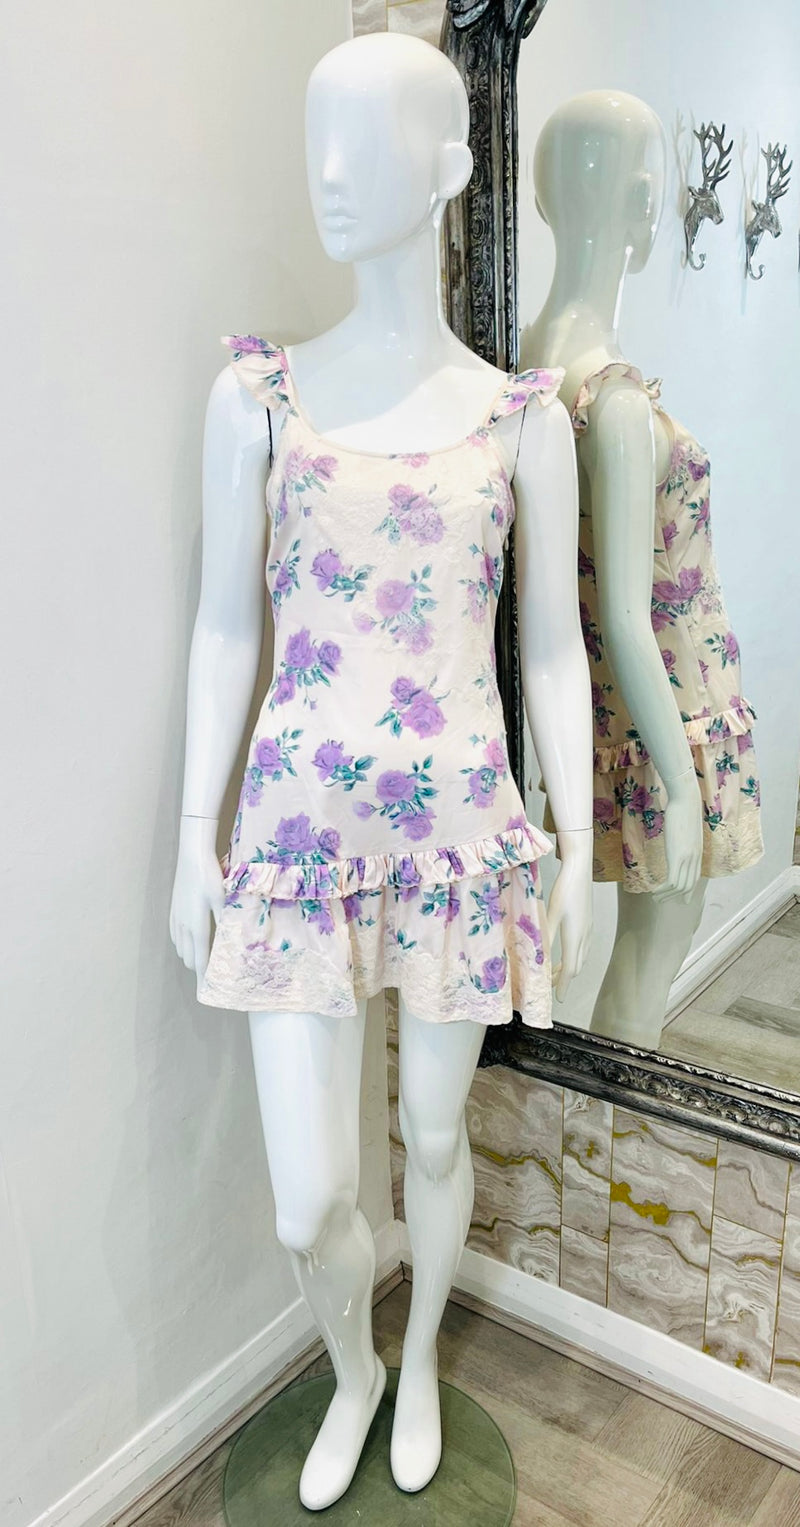 LoveShackFancy Lace Floral Crepe Dress. Size 2US